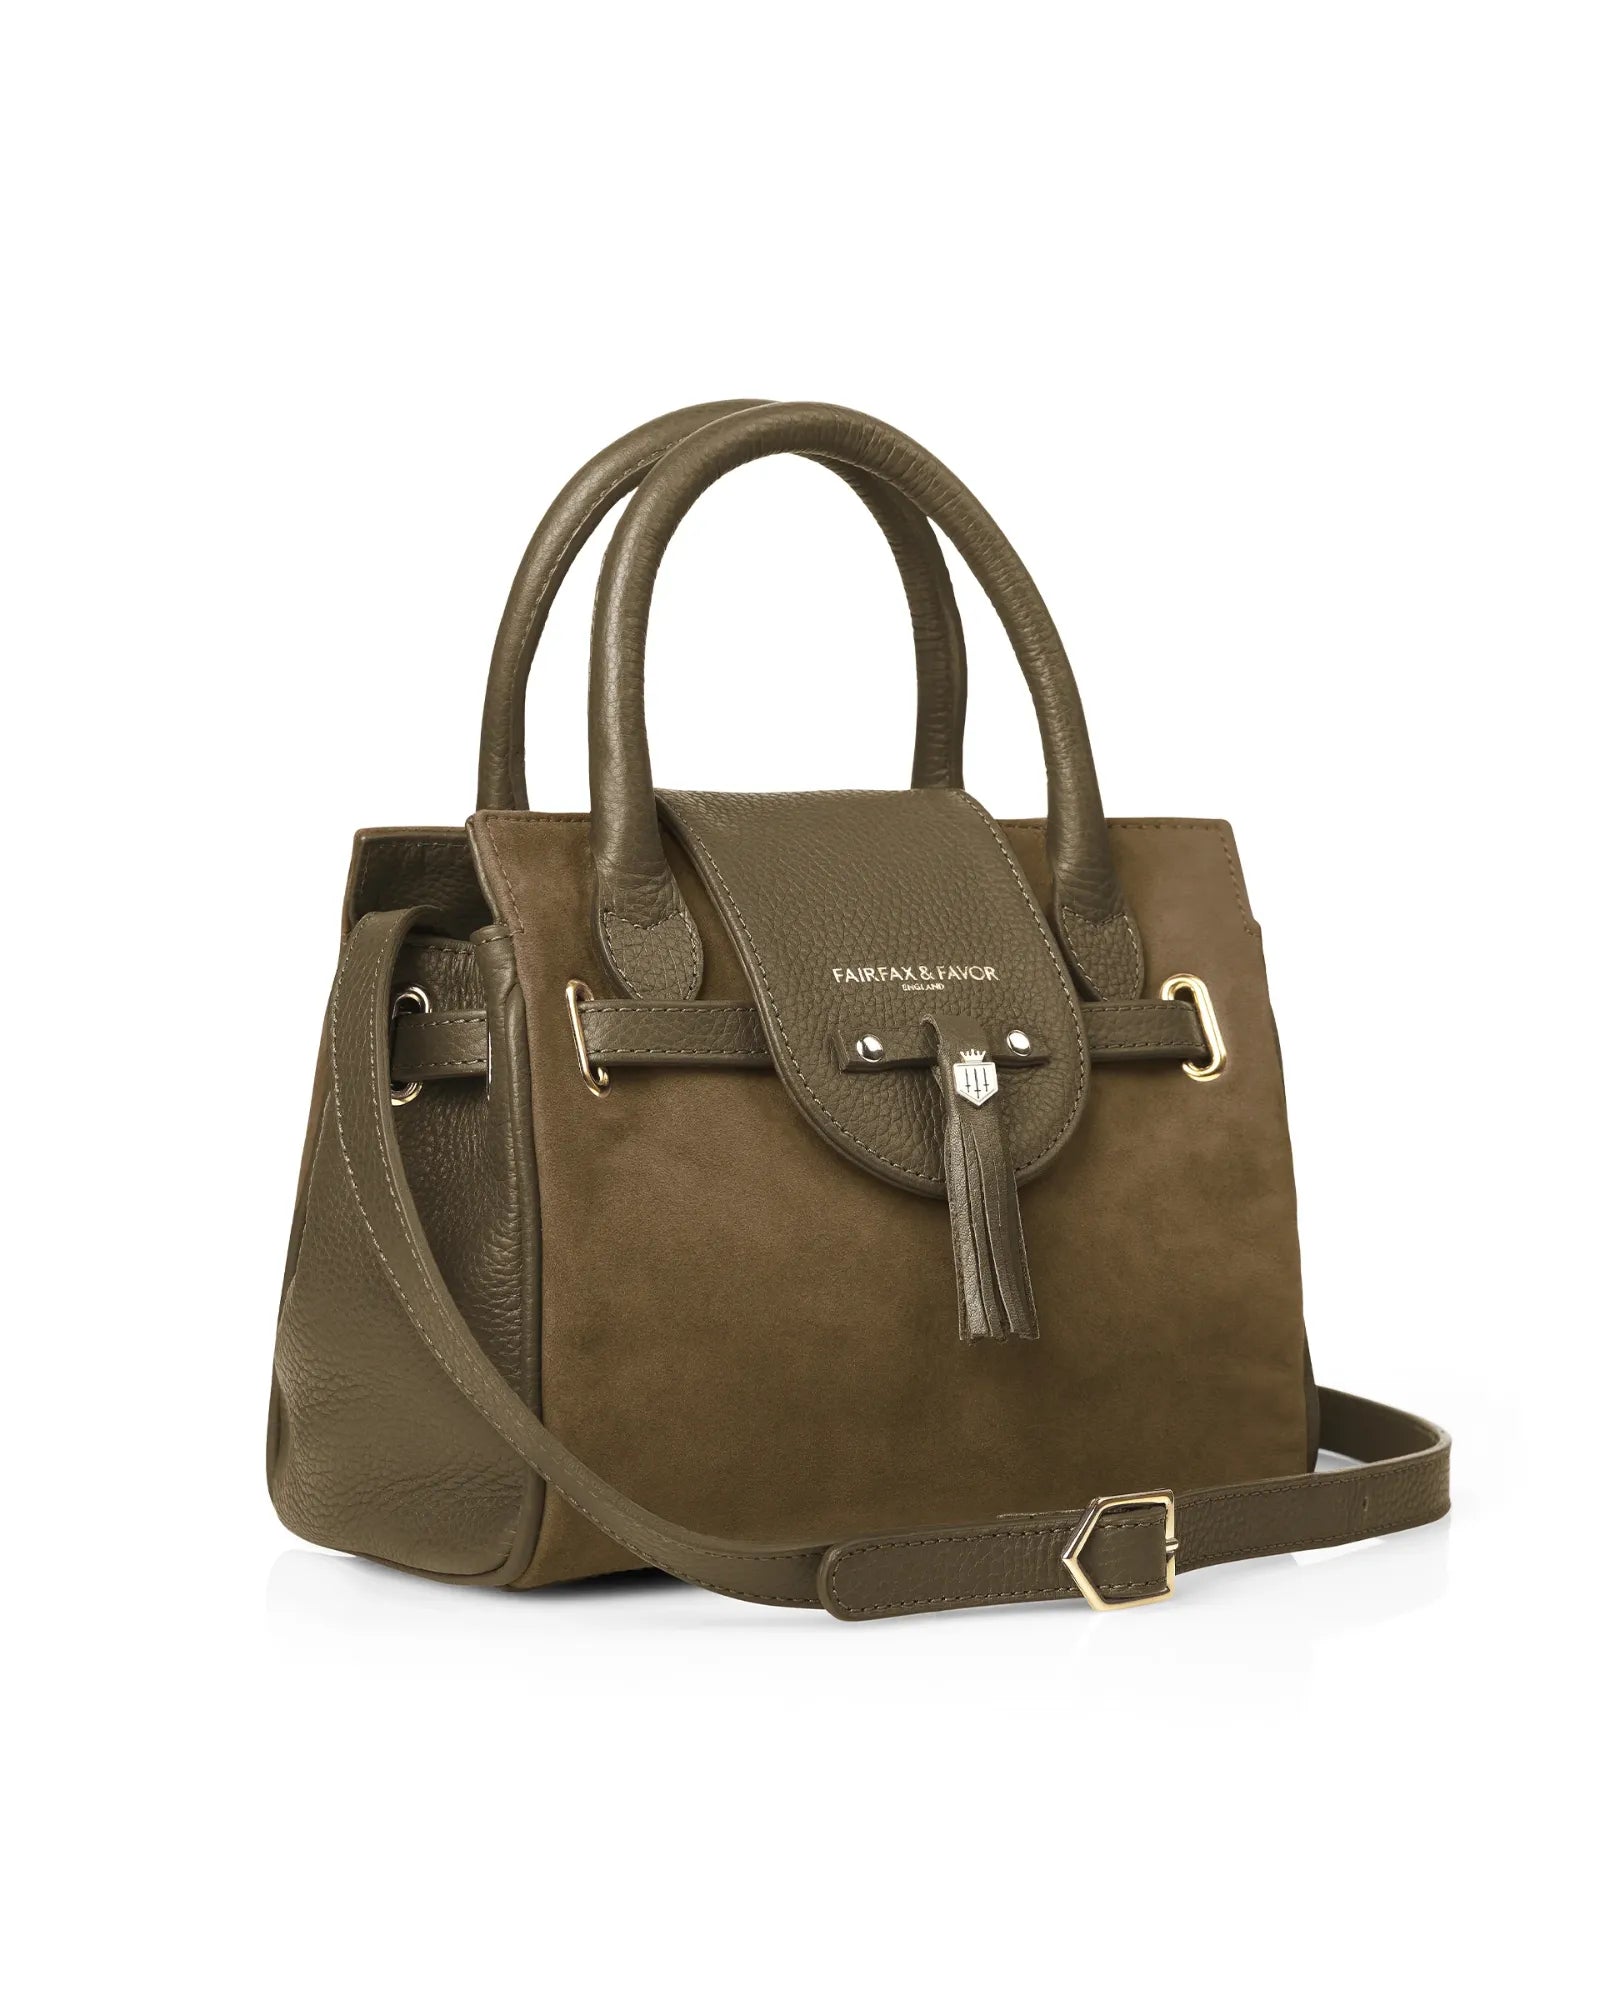 The Mini Windsor Handbag in Olive Suede